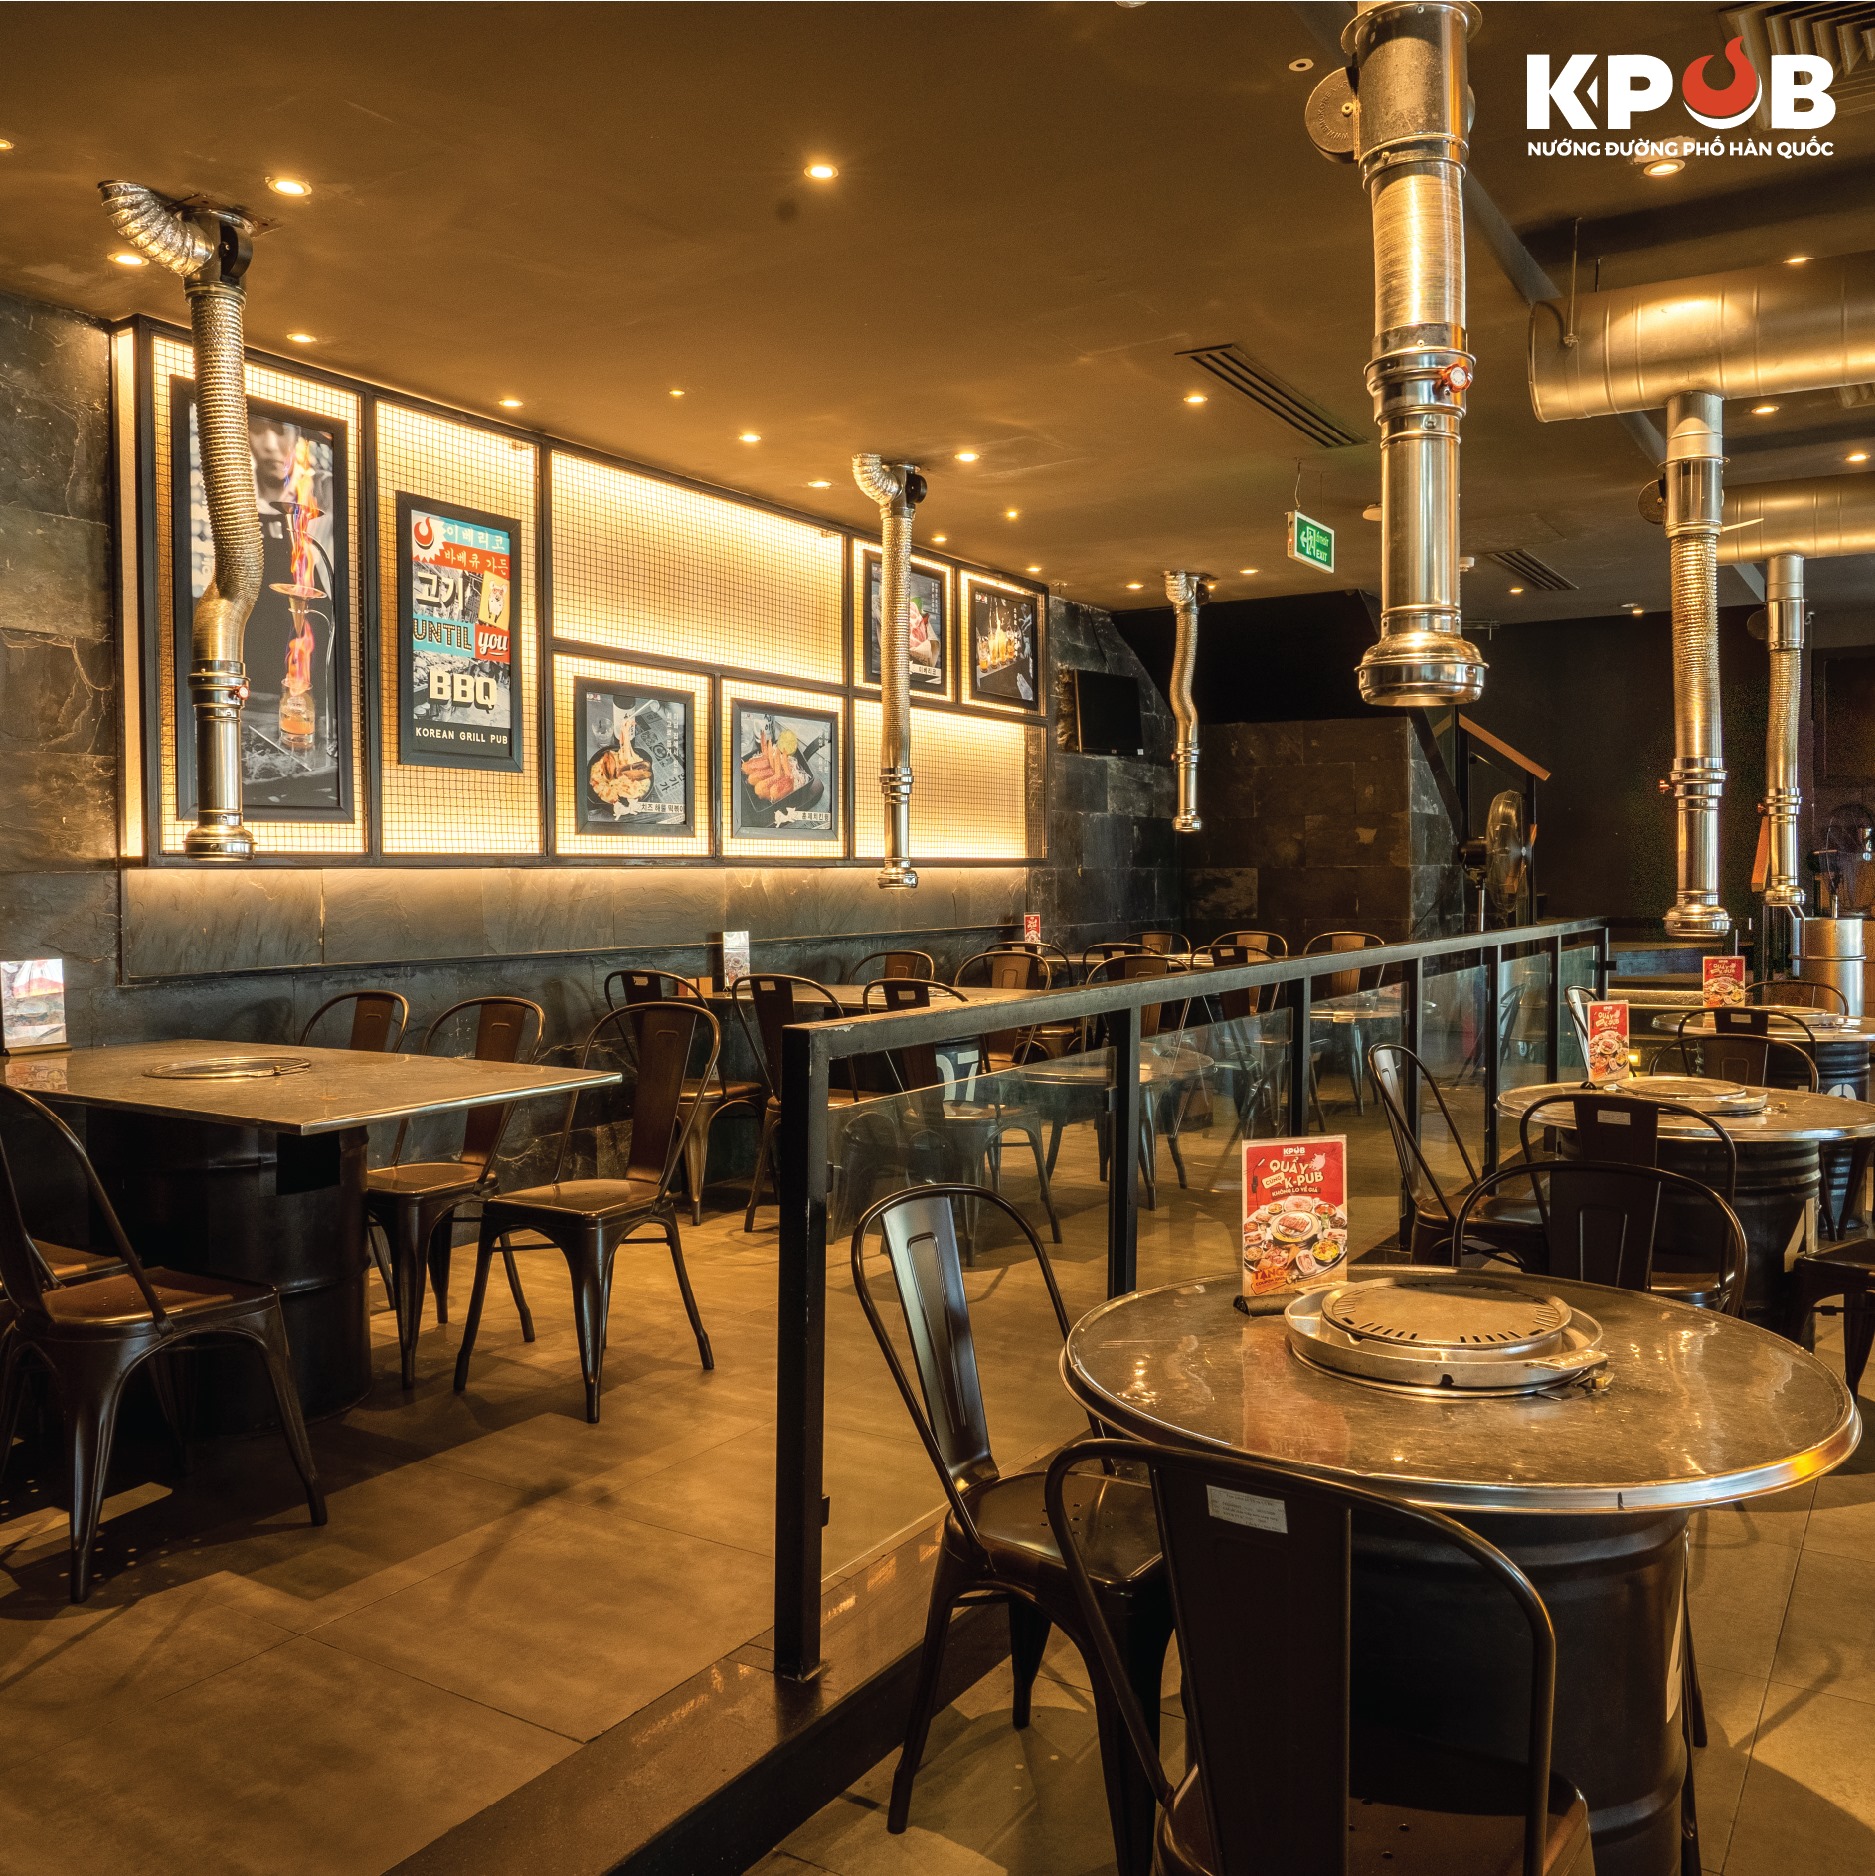 K-Pub - Korean Grill Pub